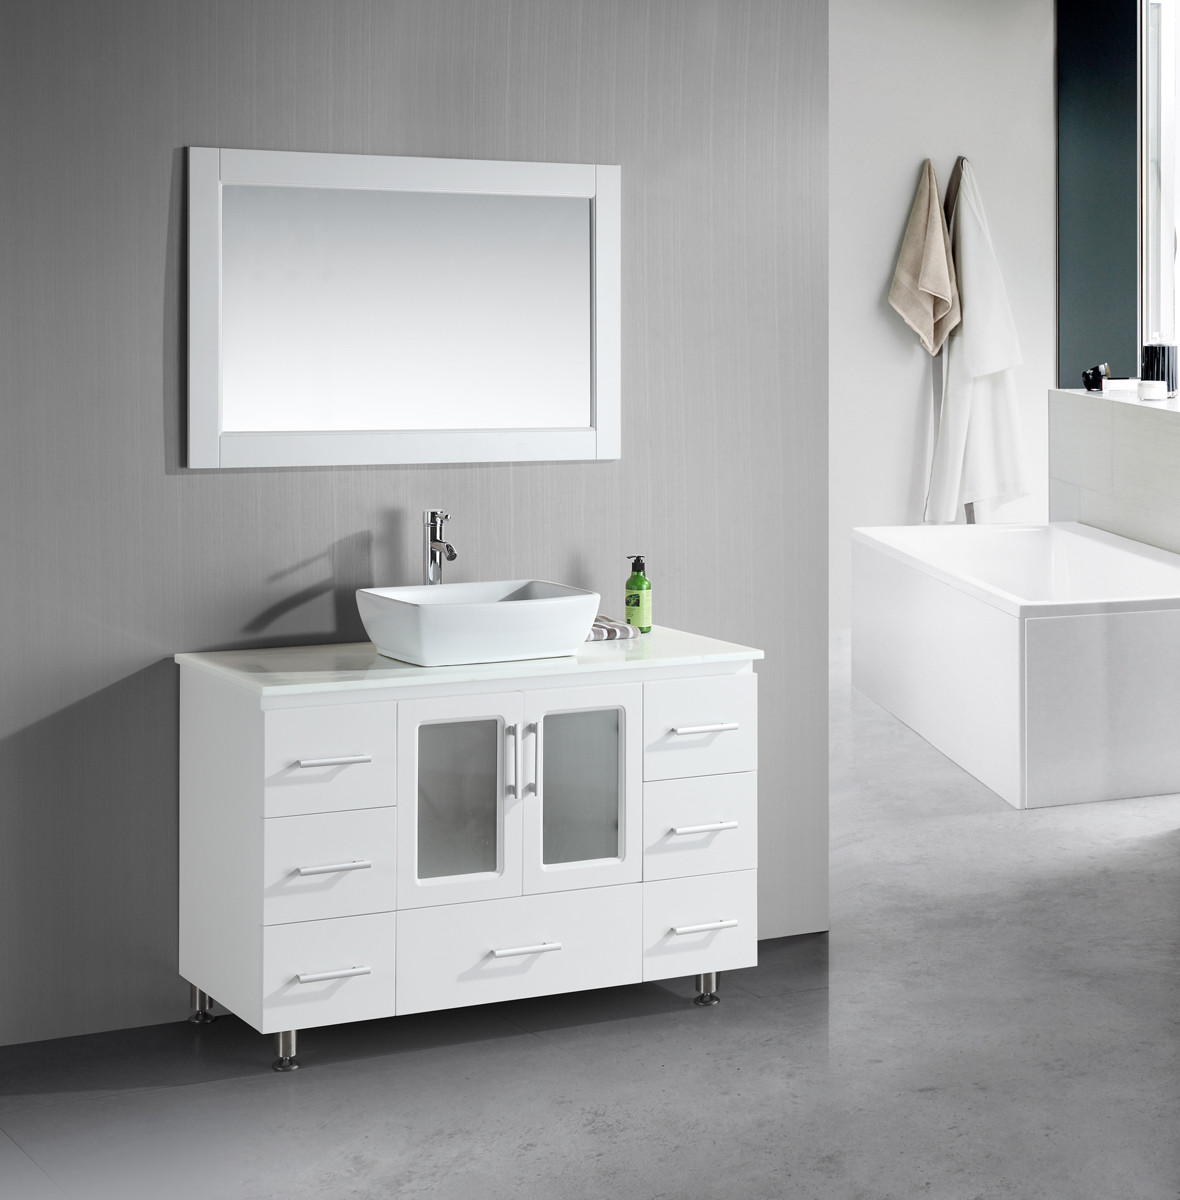 Small White Bathroom Vanity
 Small Bathroom Vanities With Vessel Sinks to Create Cool